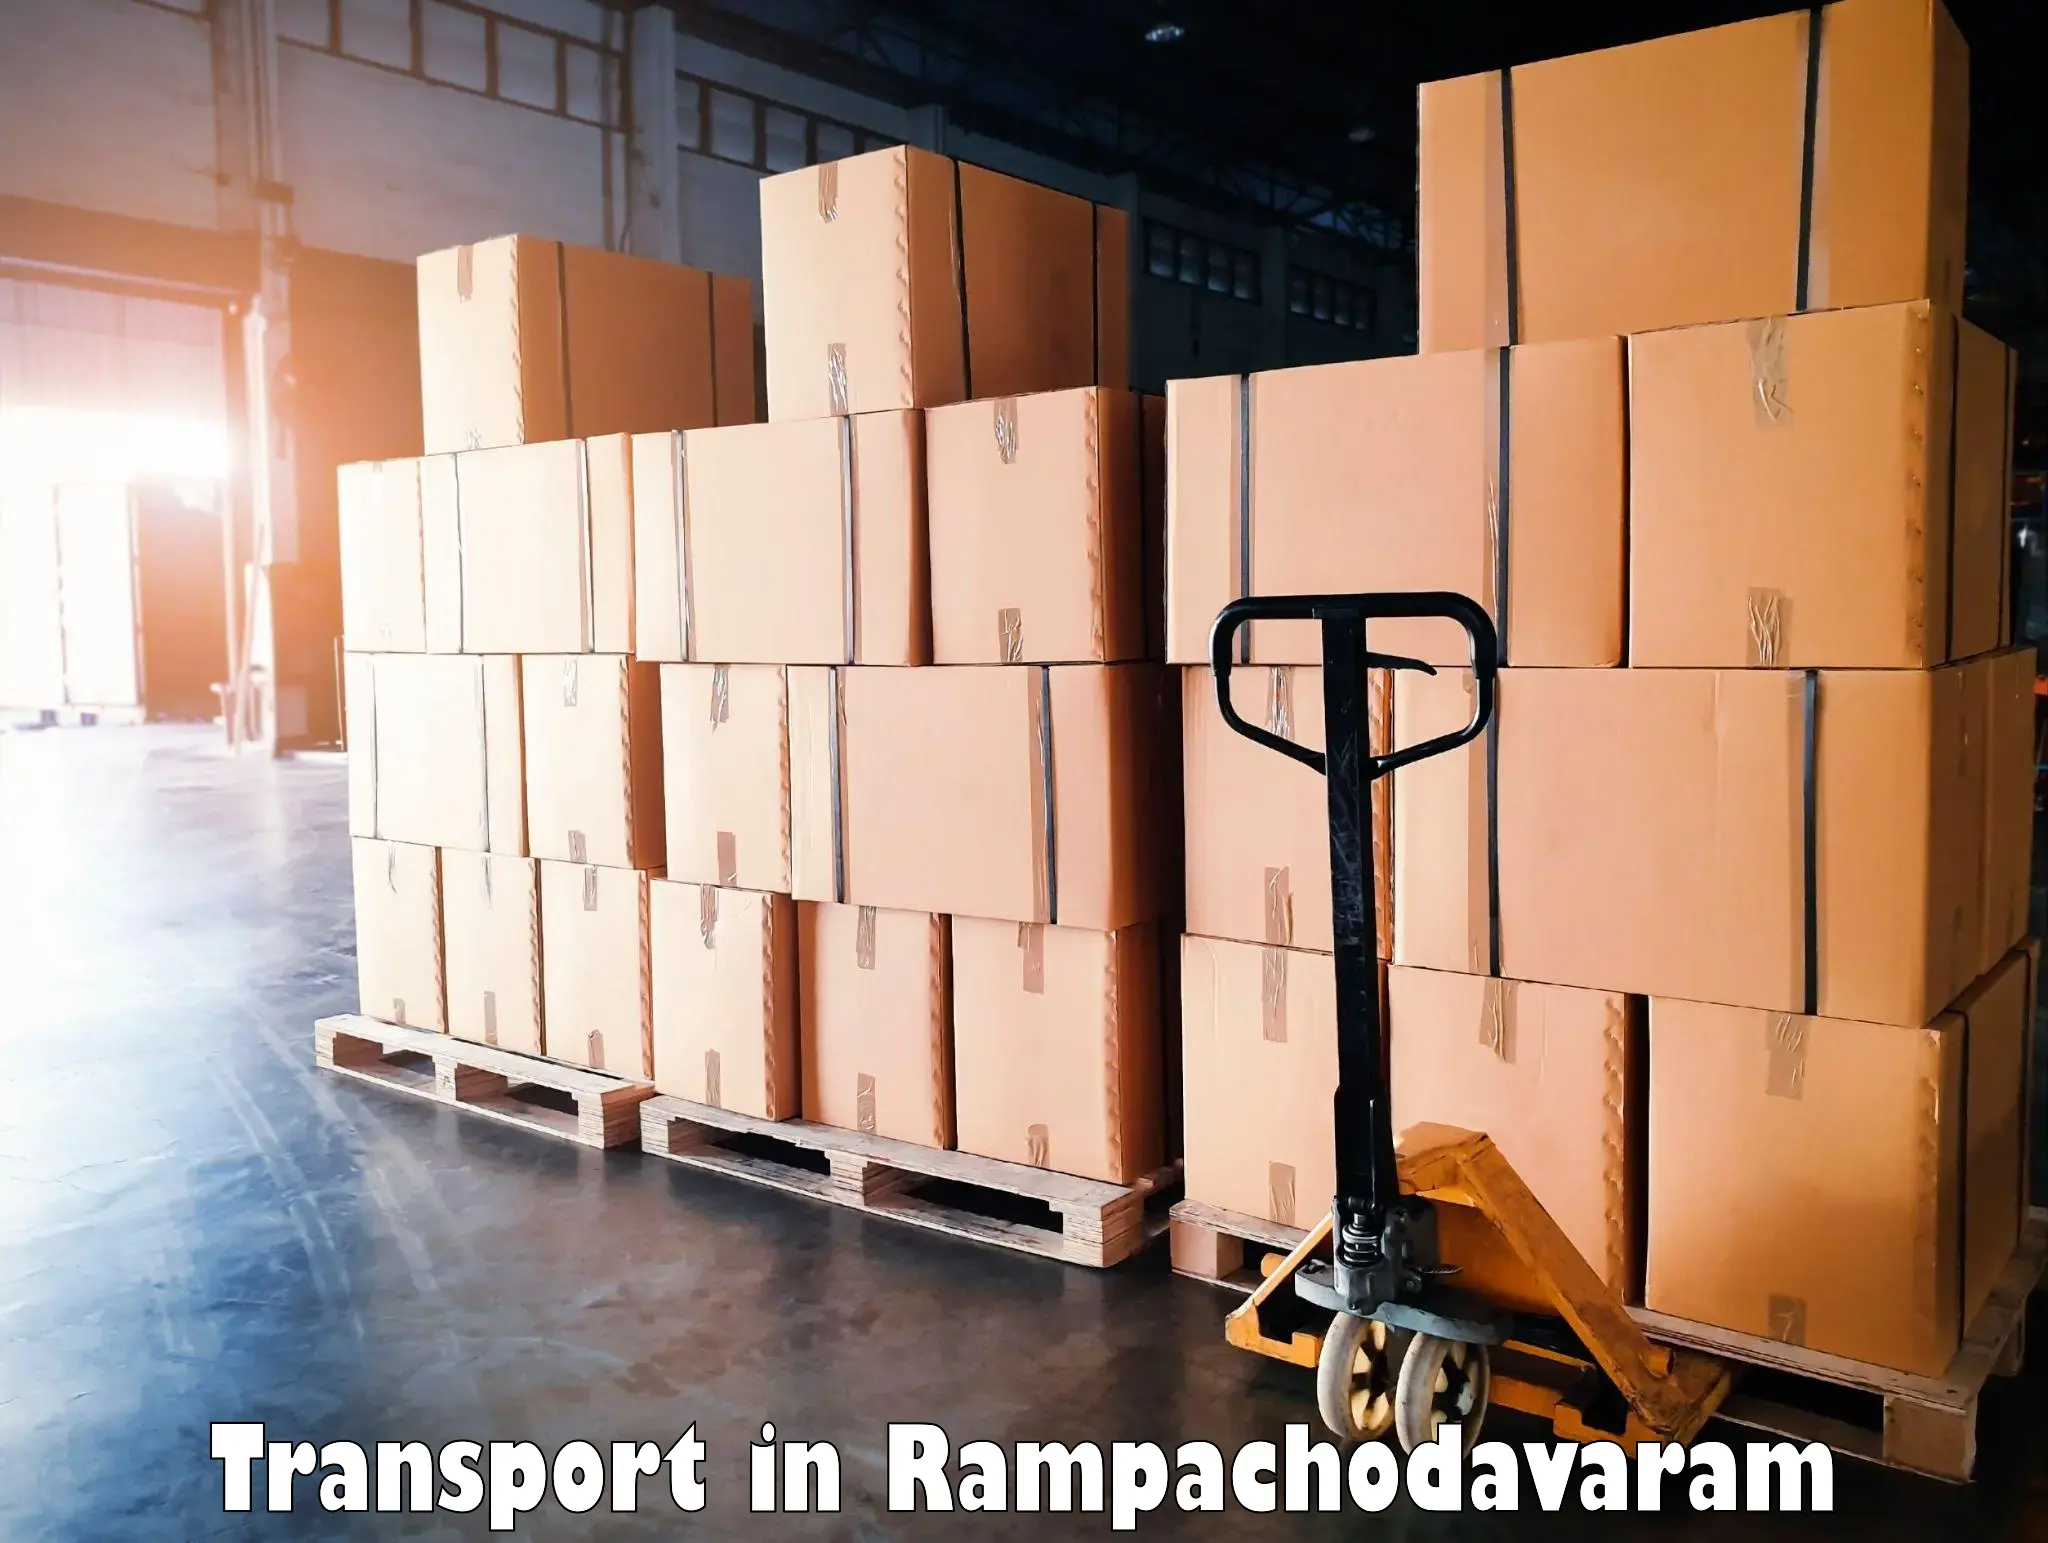 Daily parcel service transport in Rampachodavaram